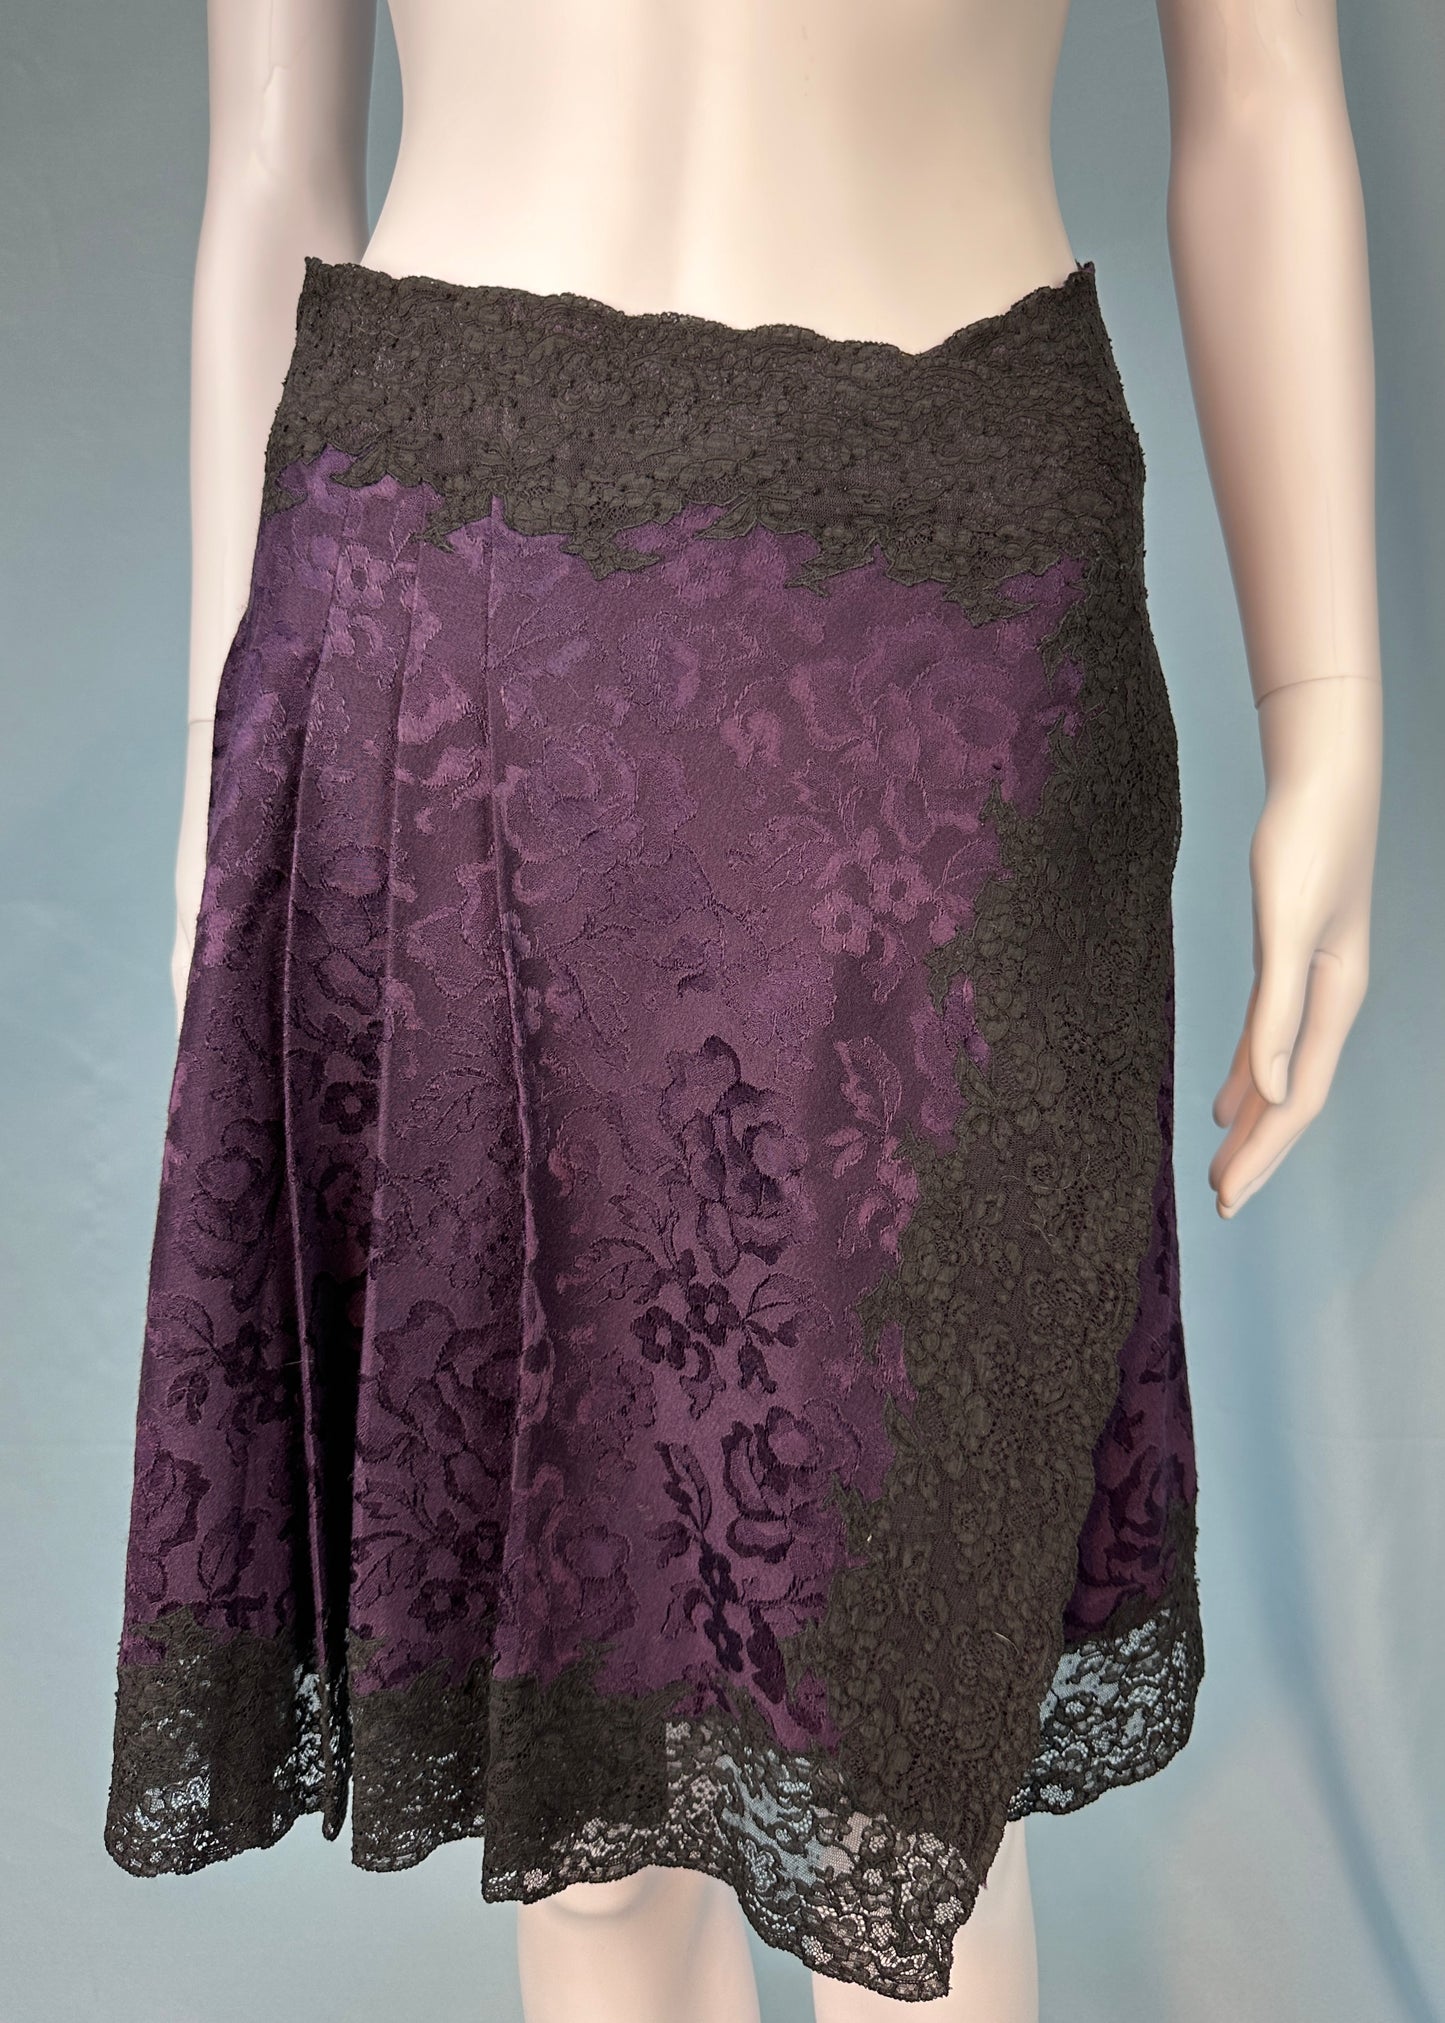 Dior Fall 1998 Purple Silk Brocade and Lace Skirt & Jacket Set